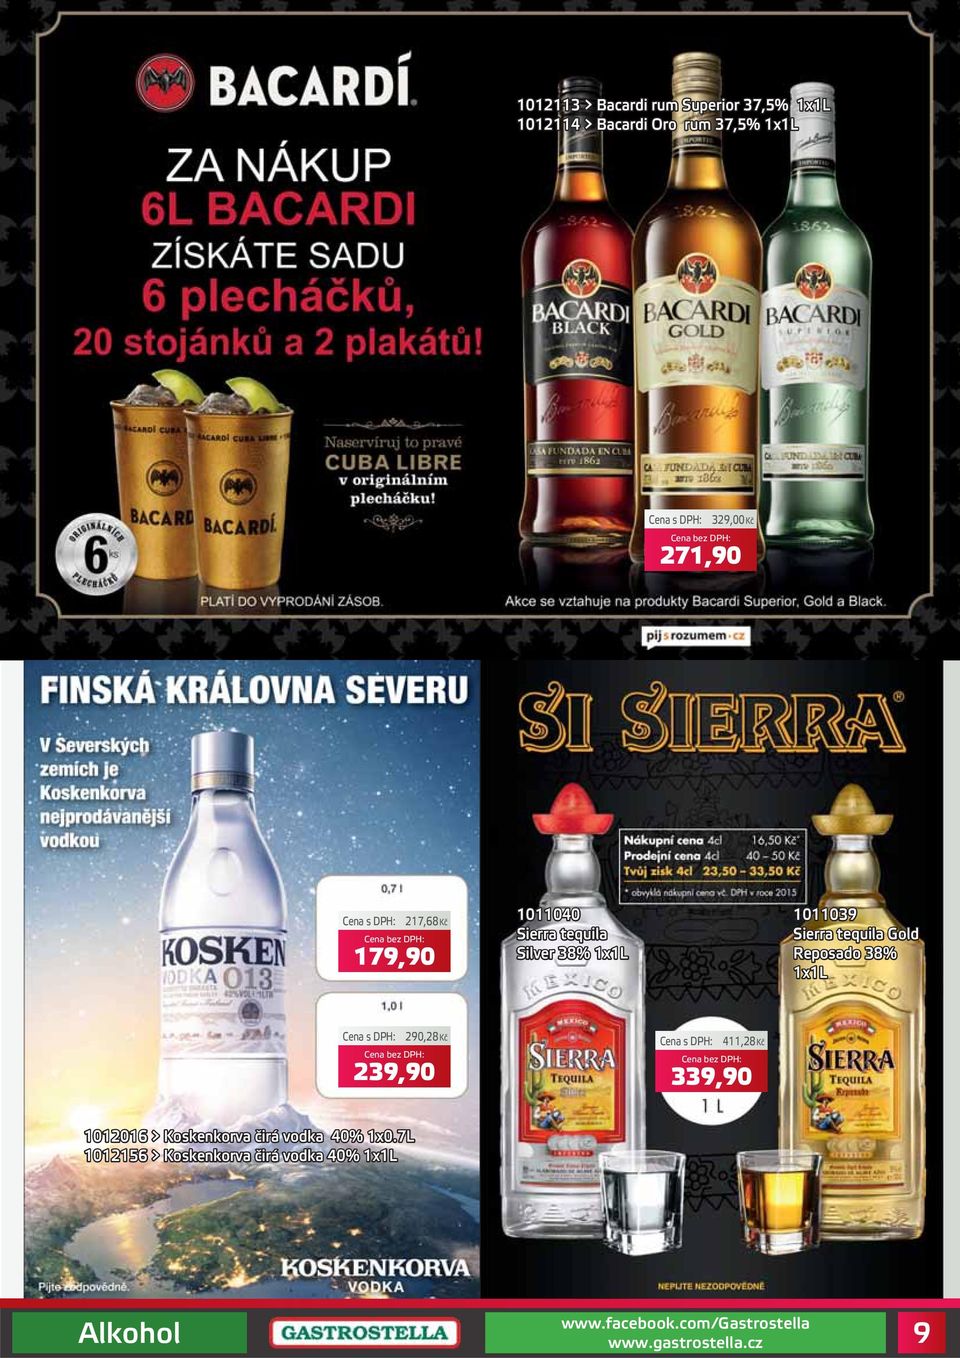 Sierra tequila Gold Reposado 38% 1x1L 290,28Kč 239,90 411,28Kč 339,90 1012016